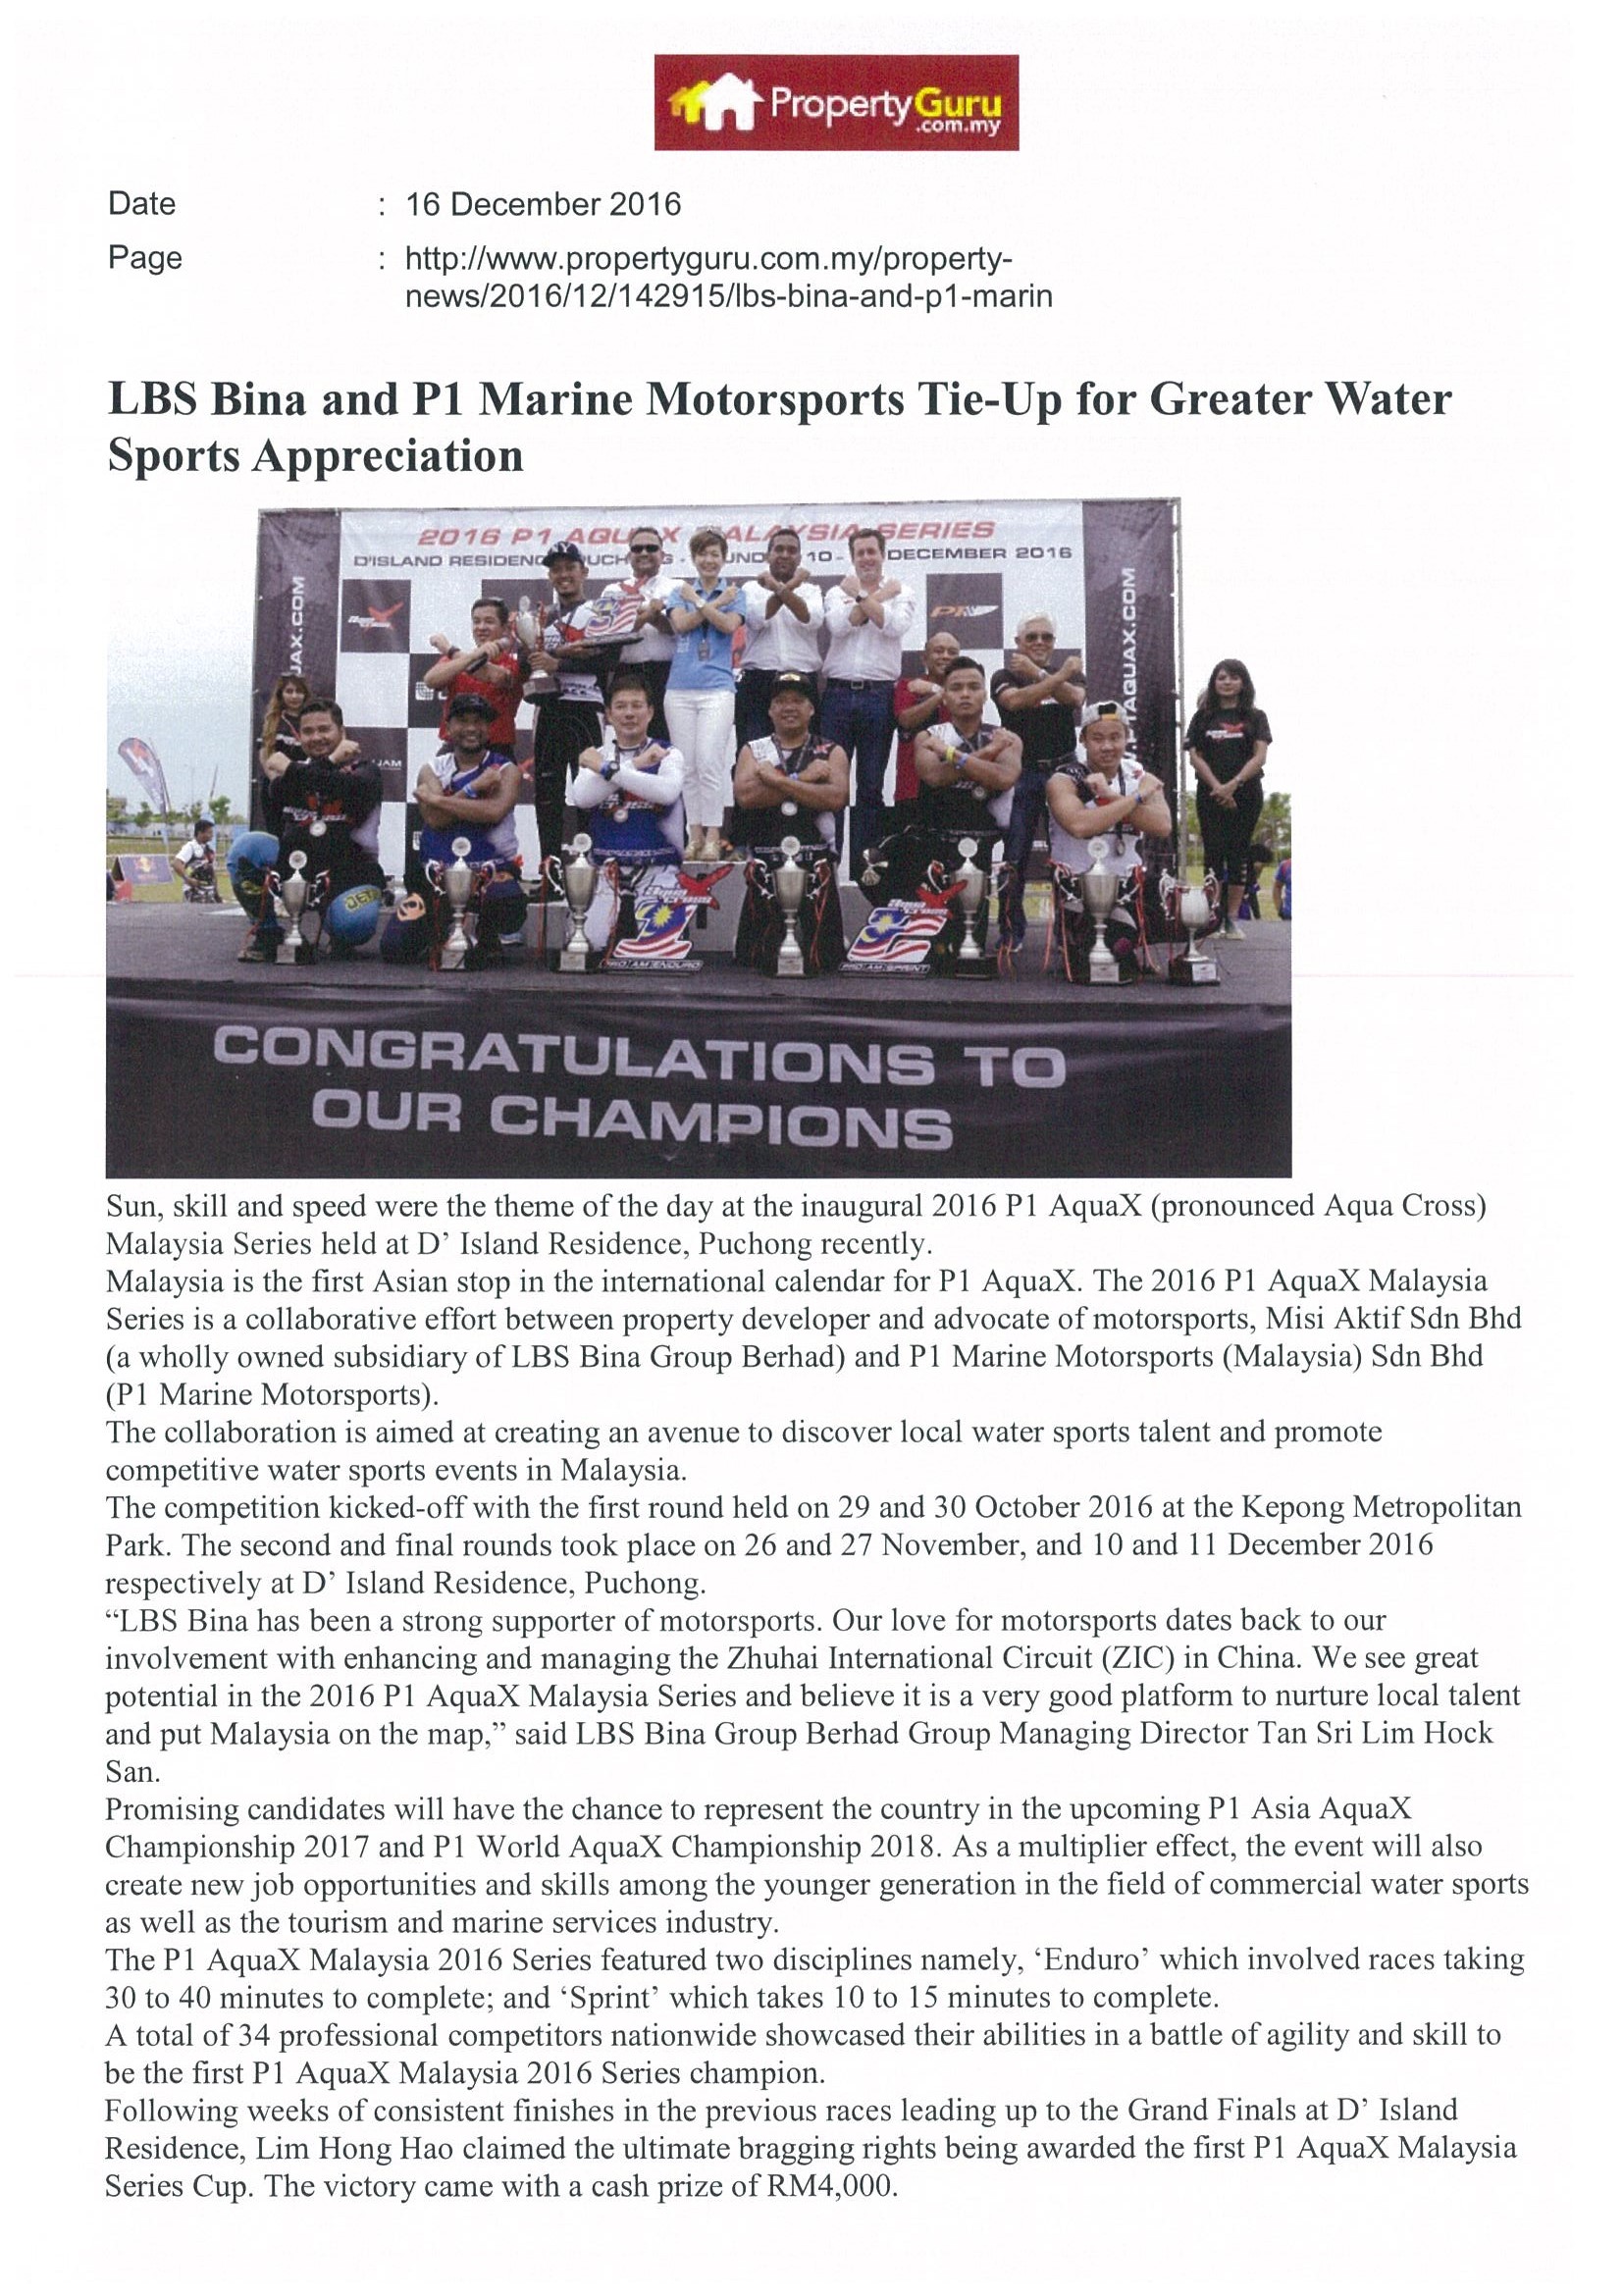 2016.12.16 Propertyguru.com Online – LBS Bina and P1 Marine Motorsports Tie-Up for Greater Water Sports Appreciation